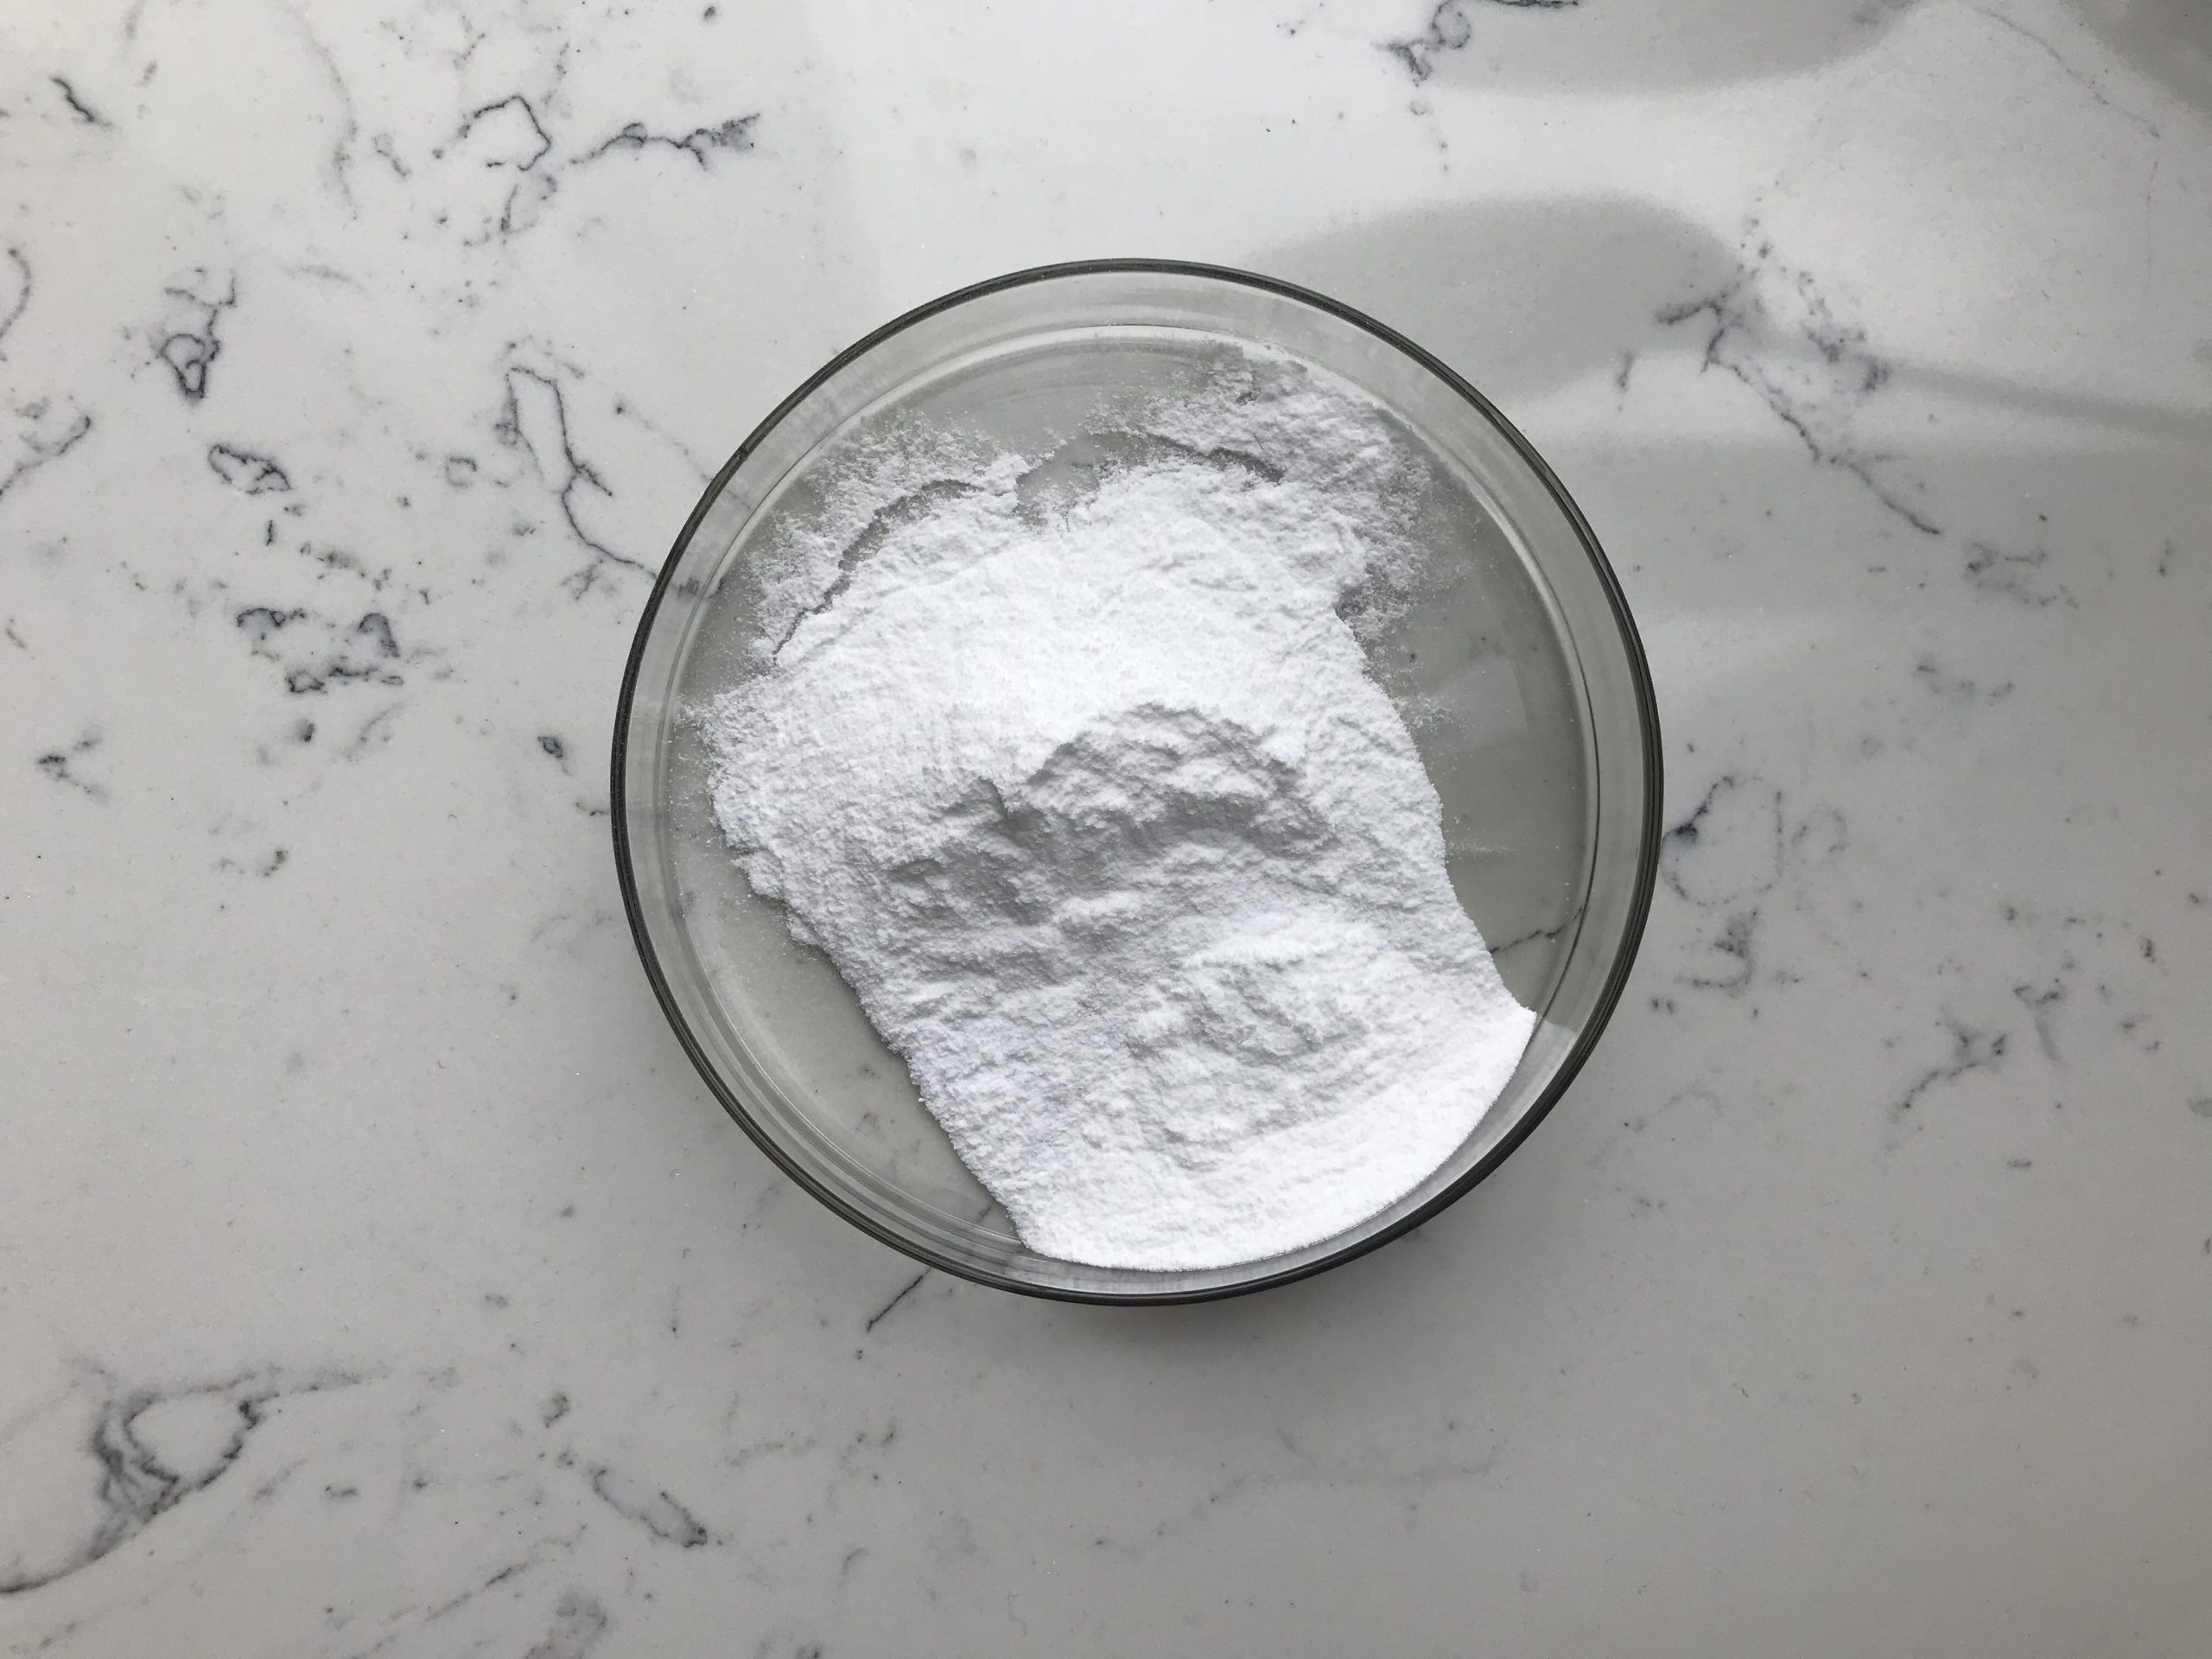 thaumatin powder